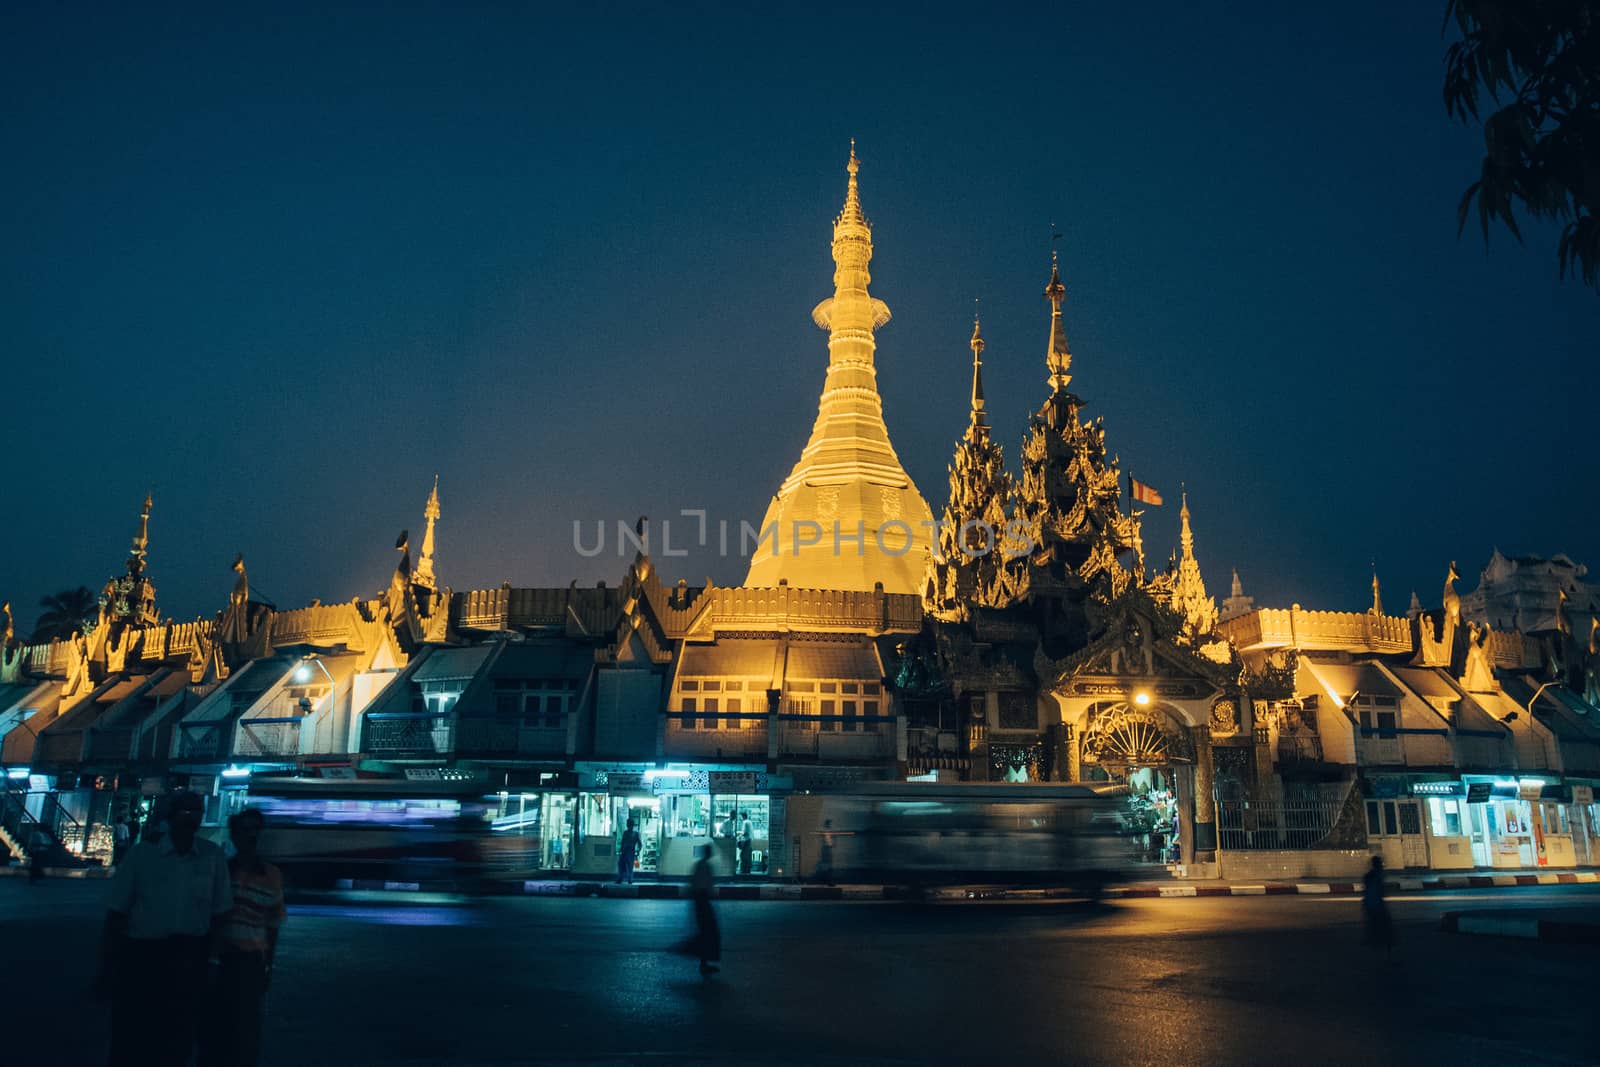 Sule Pagoda at Night by kargoo